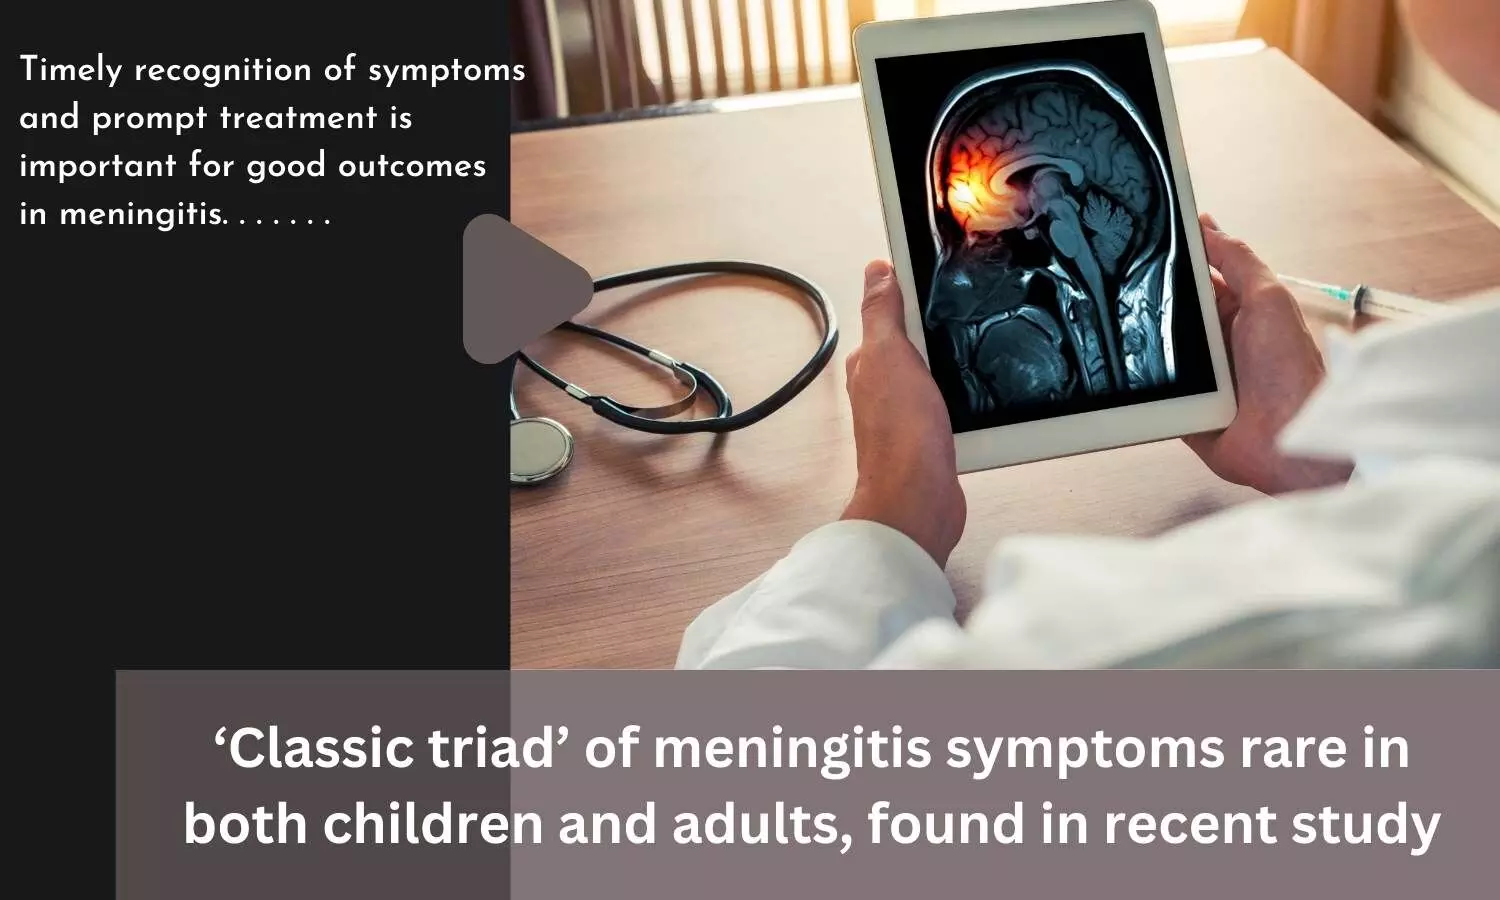 Classic triad of meningitis symptoms rare in both children and adults, found in recent study